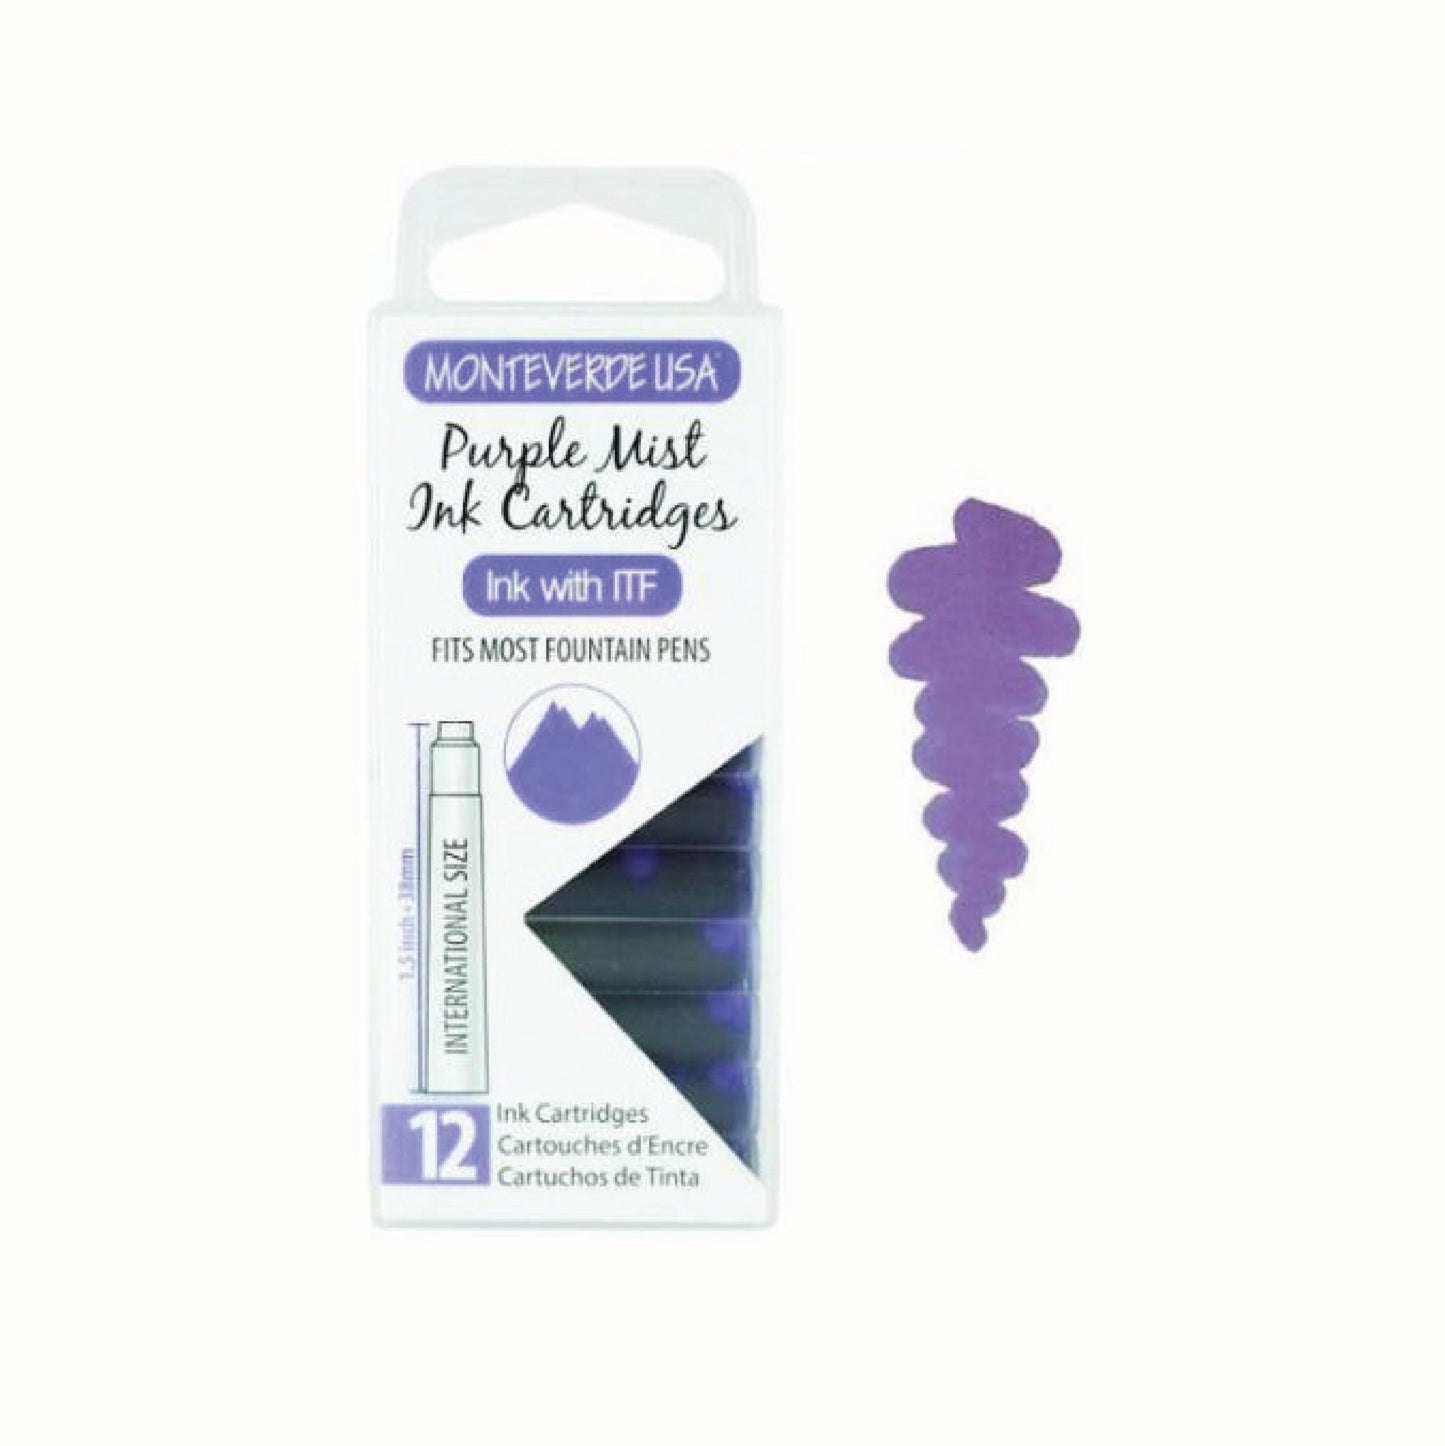 Monteverde Purple Mist Ink Cartridges (Set of 12)